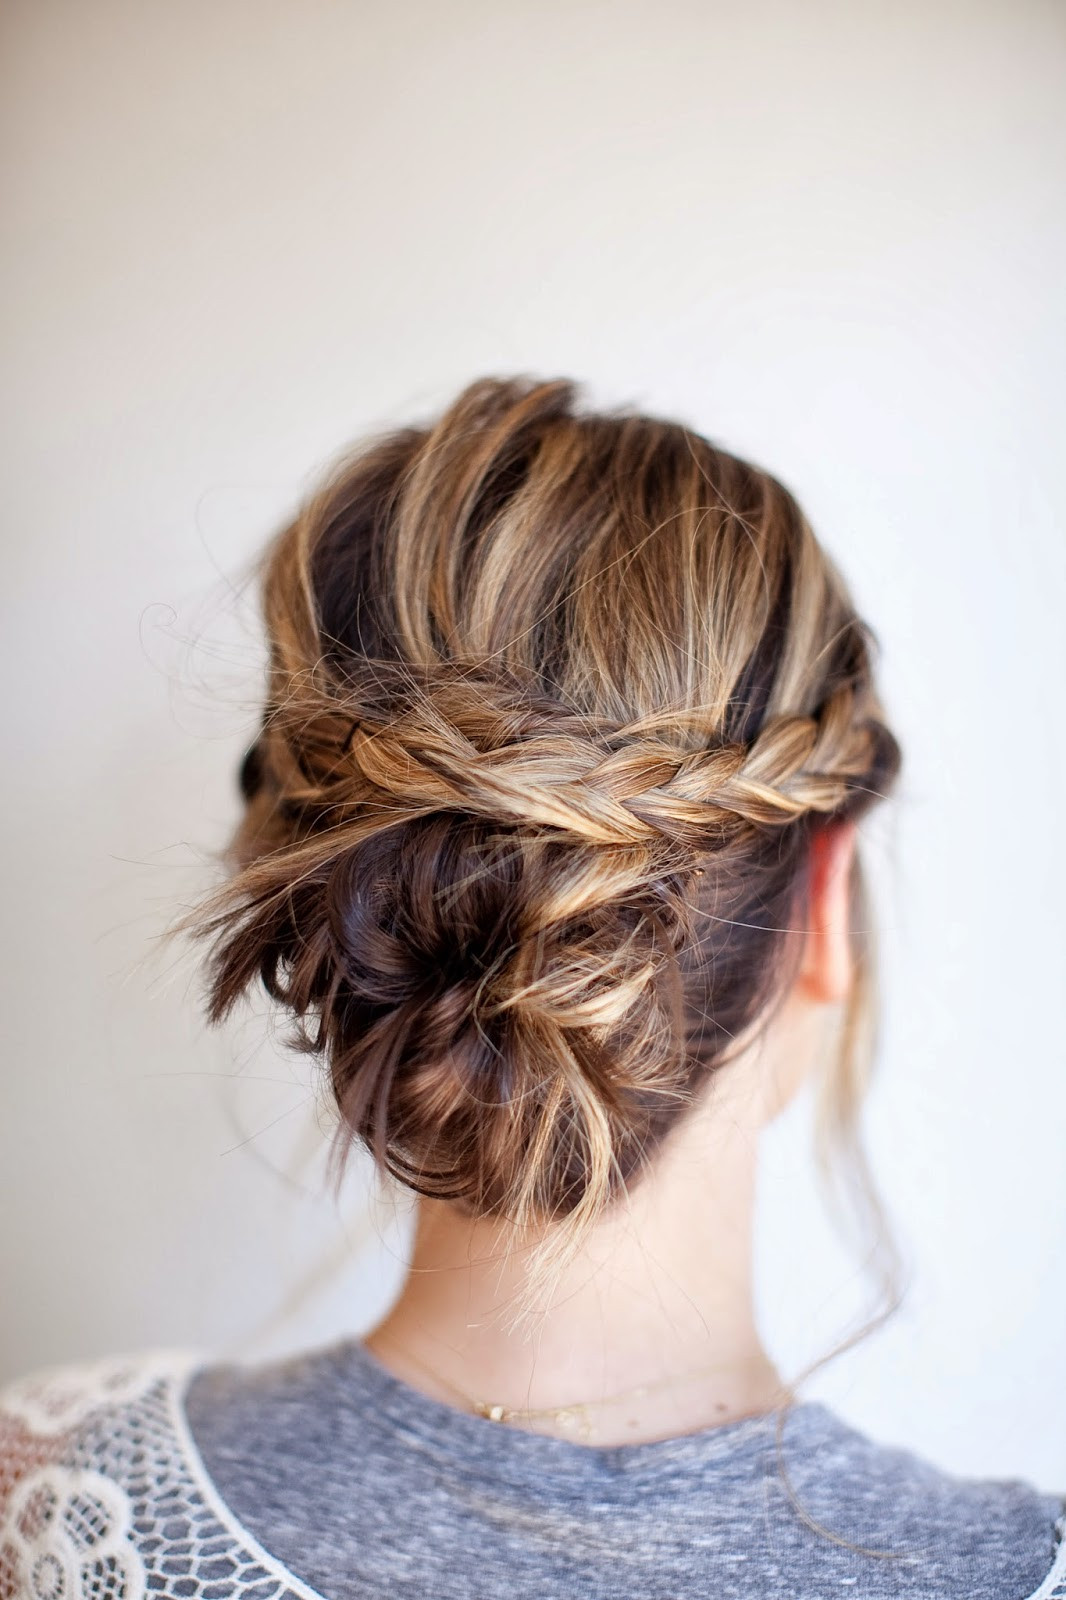 Best ideas about DIY Wedding Hair
. Save or Pin TESSA RAYANNE THREE DIY Bridal Hair Tutorials Now.